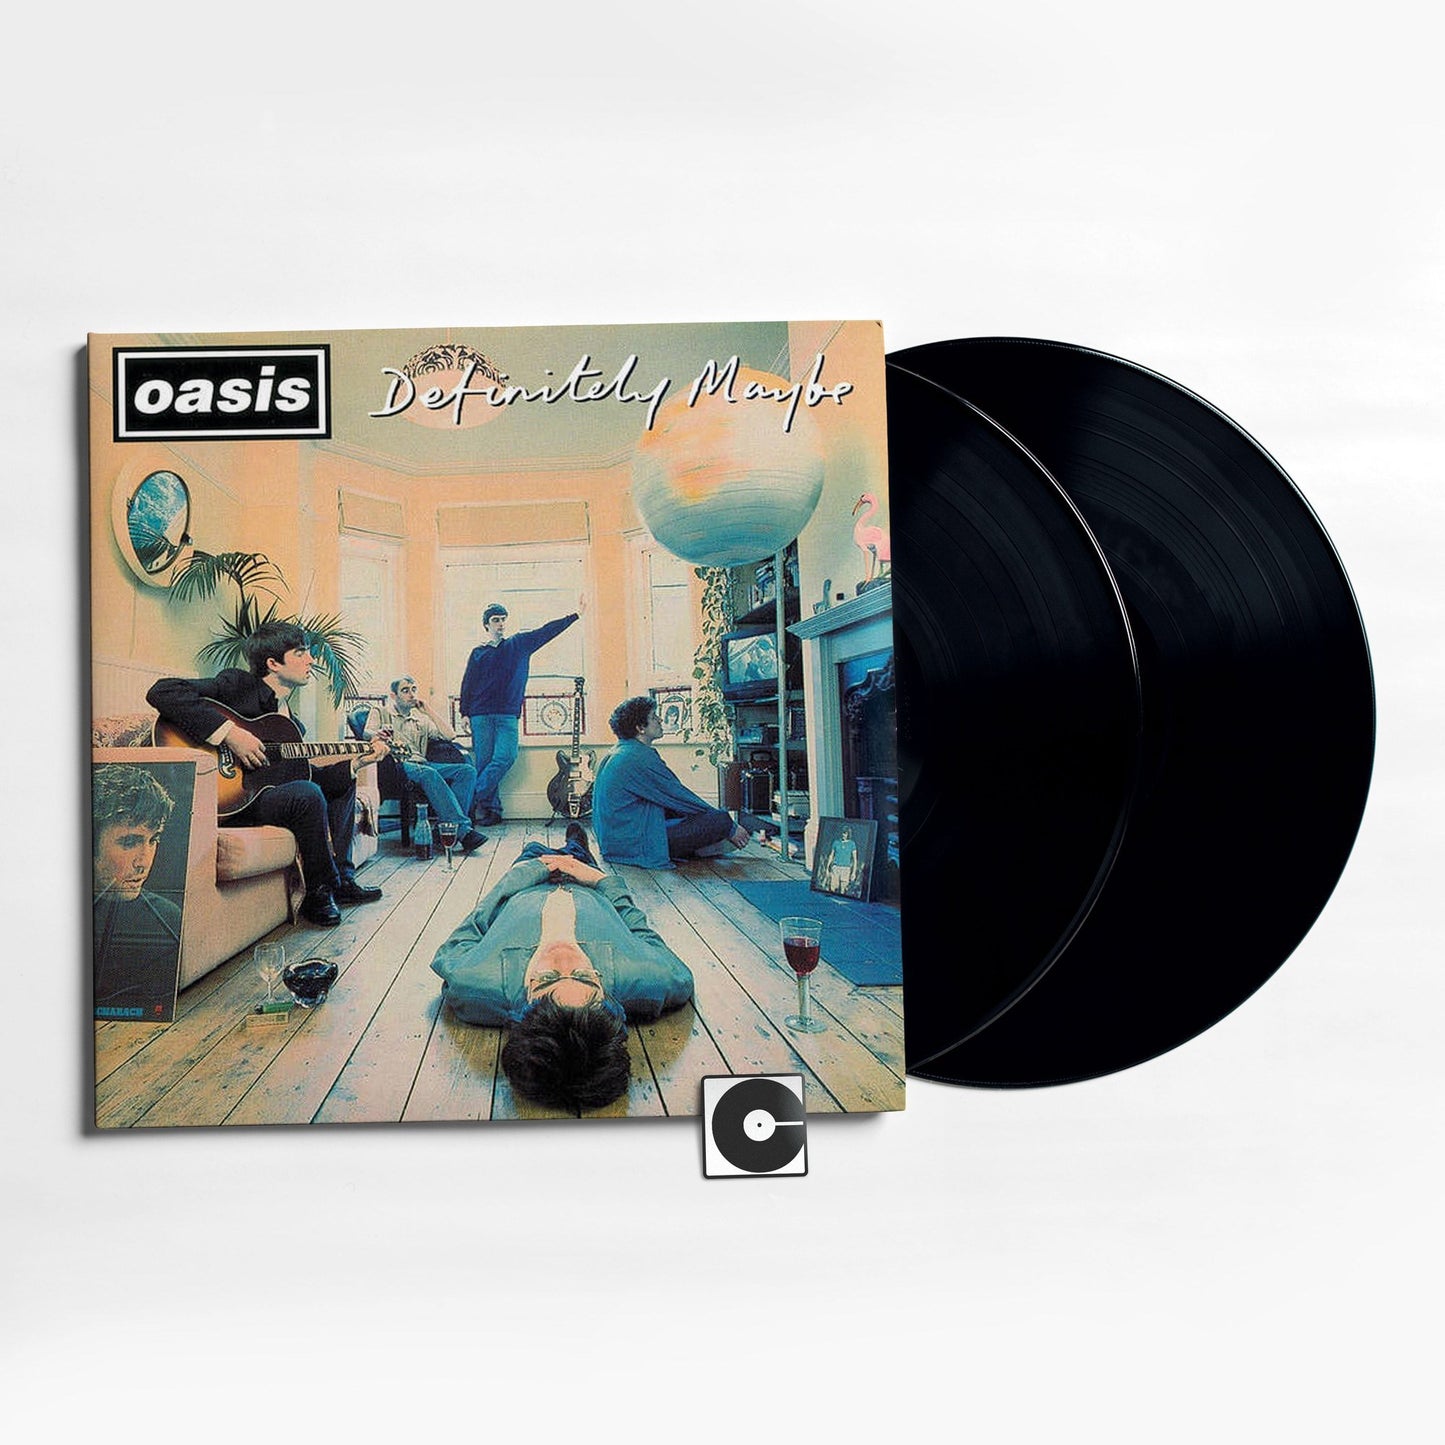 Oasis - "Definitely Maybe"